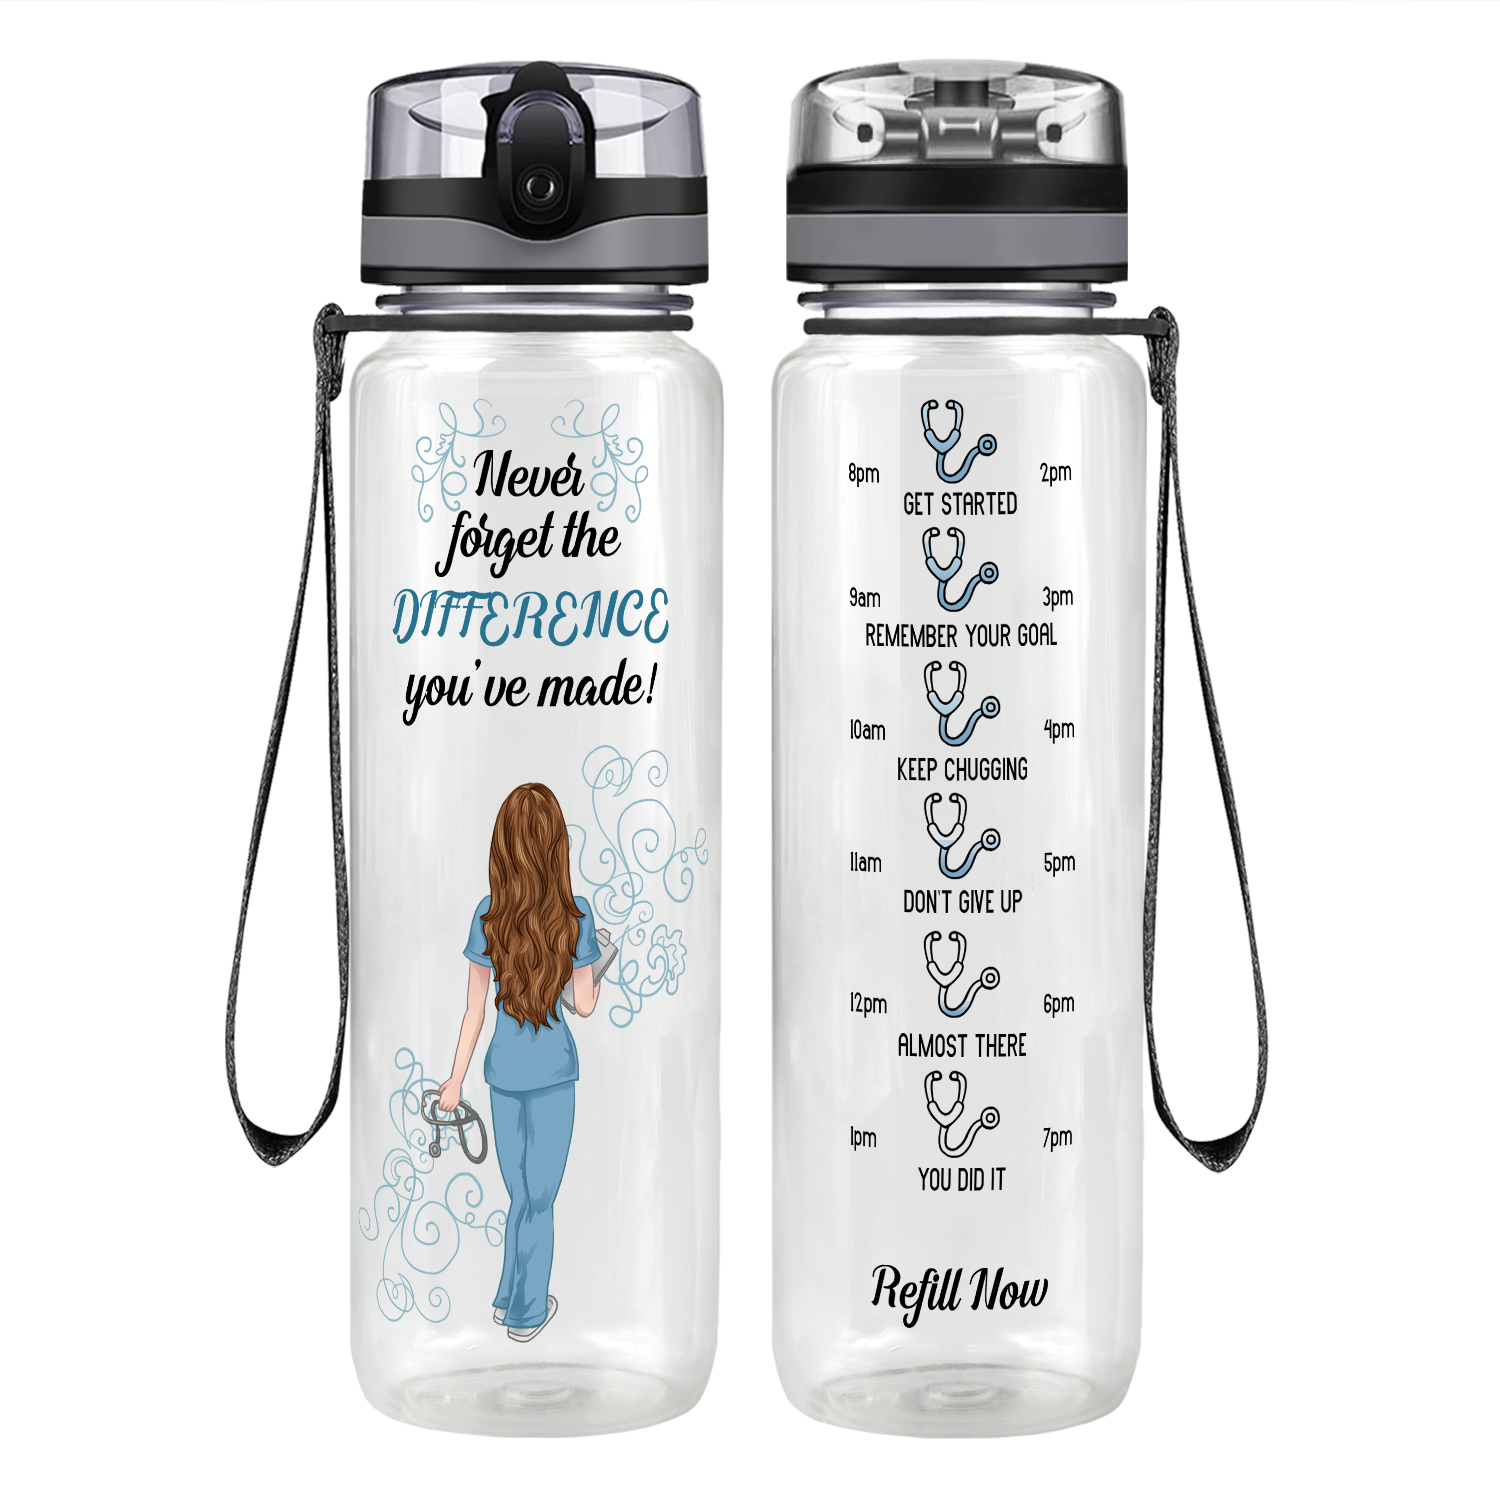 Hydration Tracker Water Bottles - Cuptify